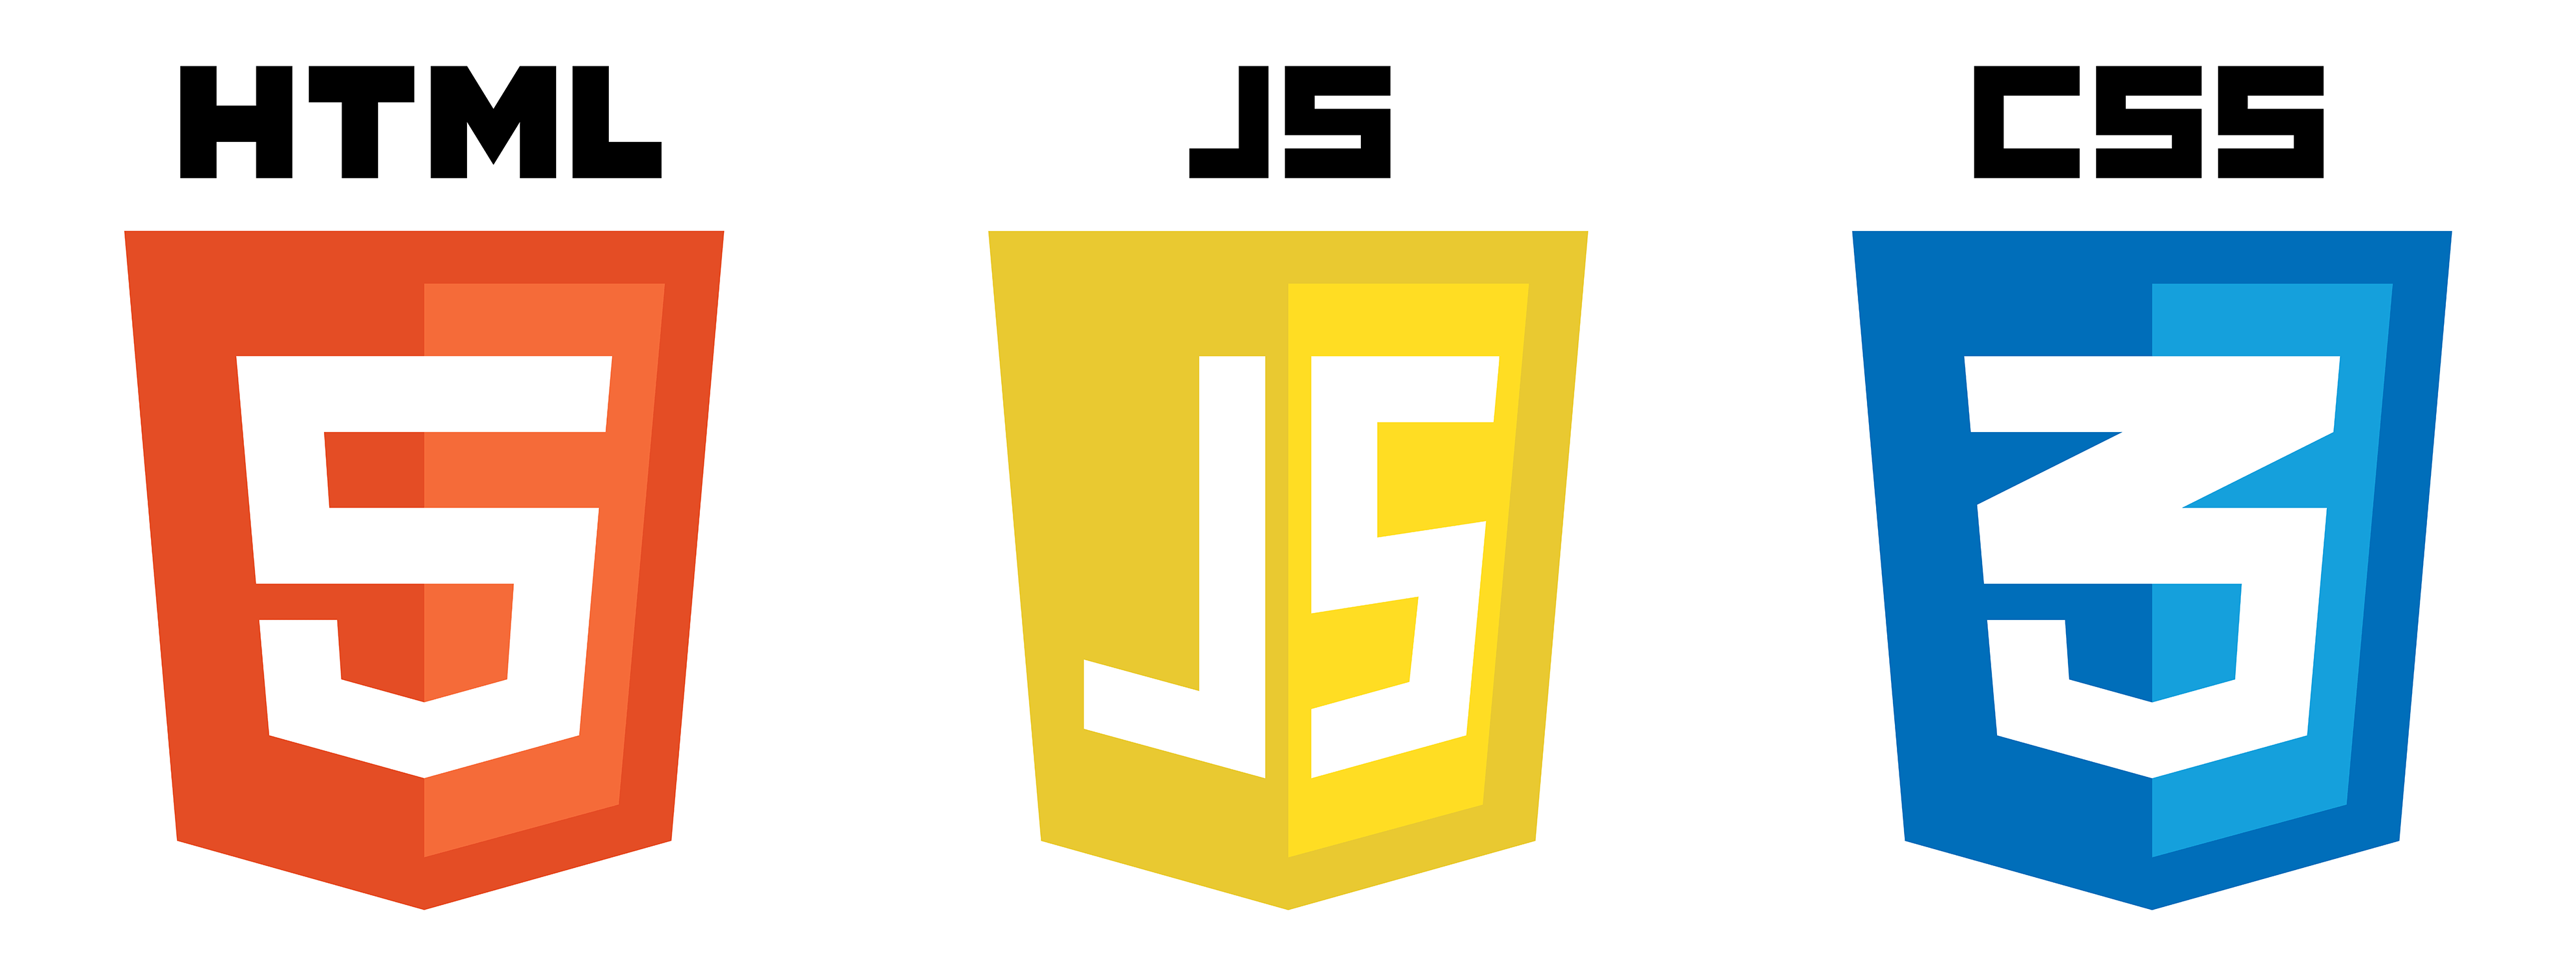 HTML5 CSS3 JavaScript Logo - Html5 Js Css3 Logo Png